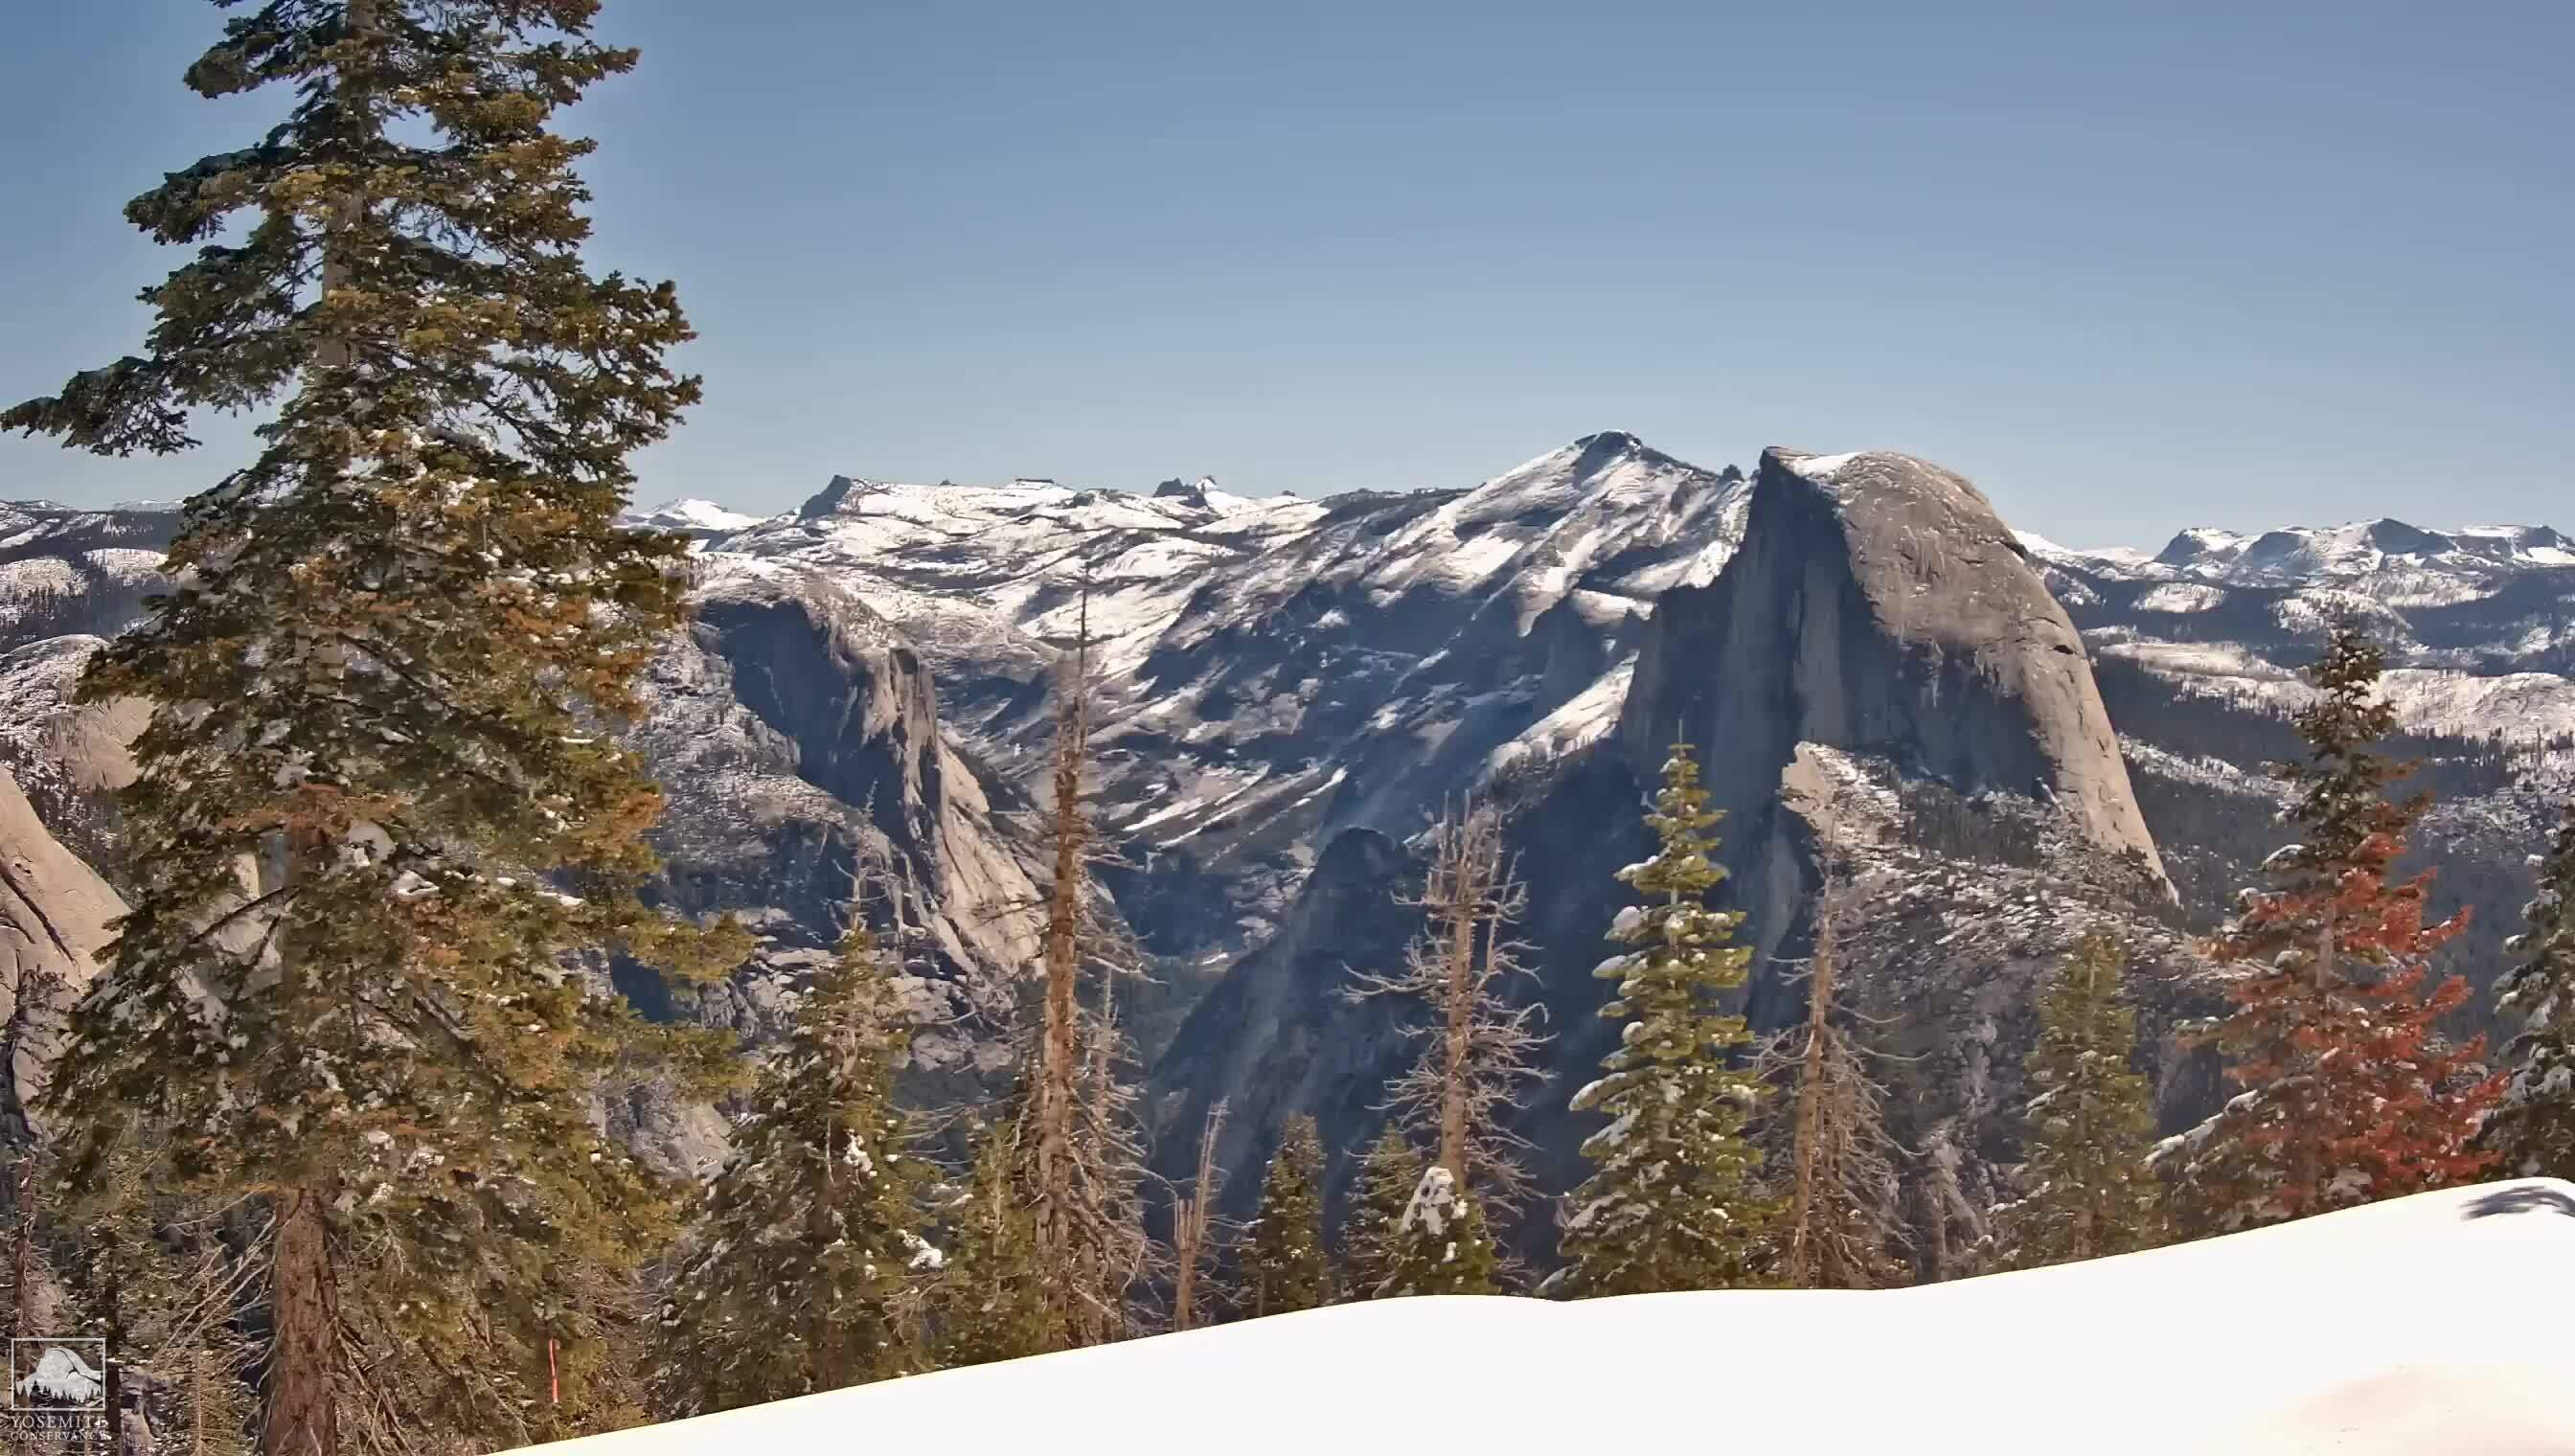 Yosemite Valley live streaming